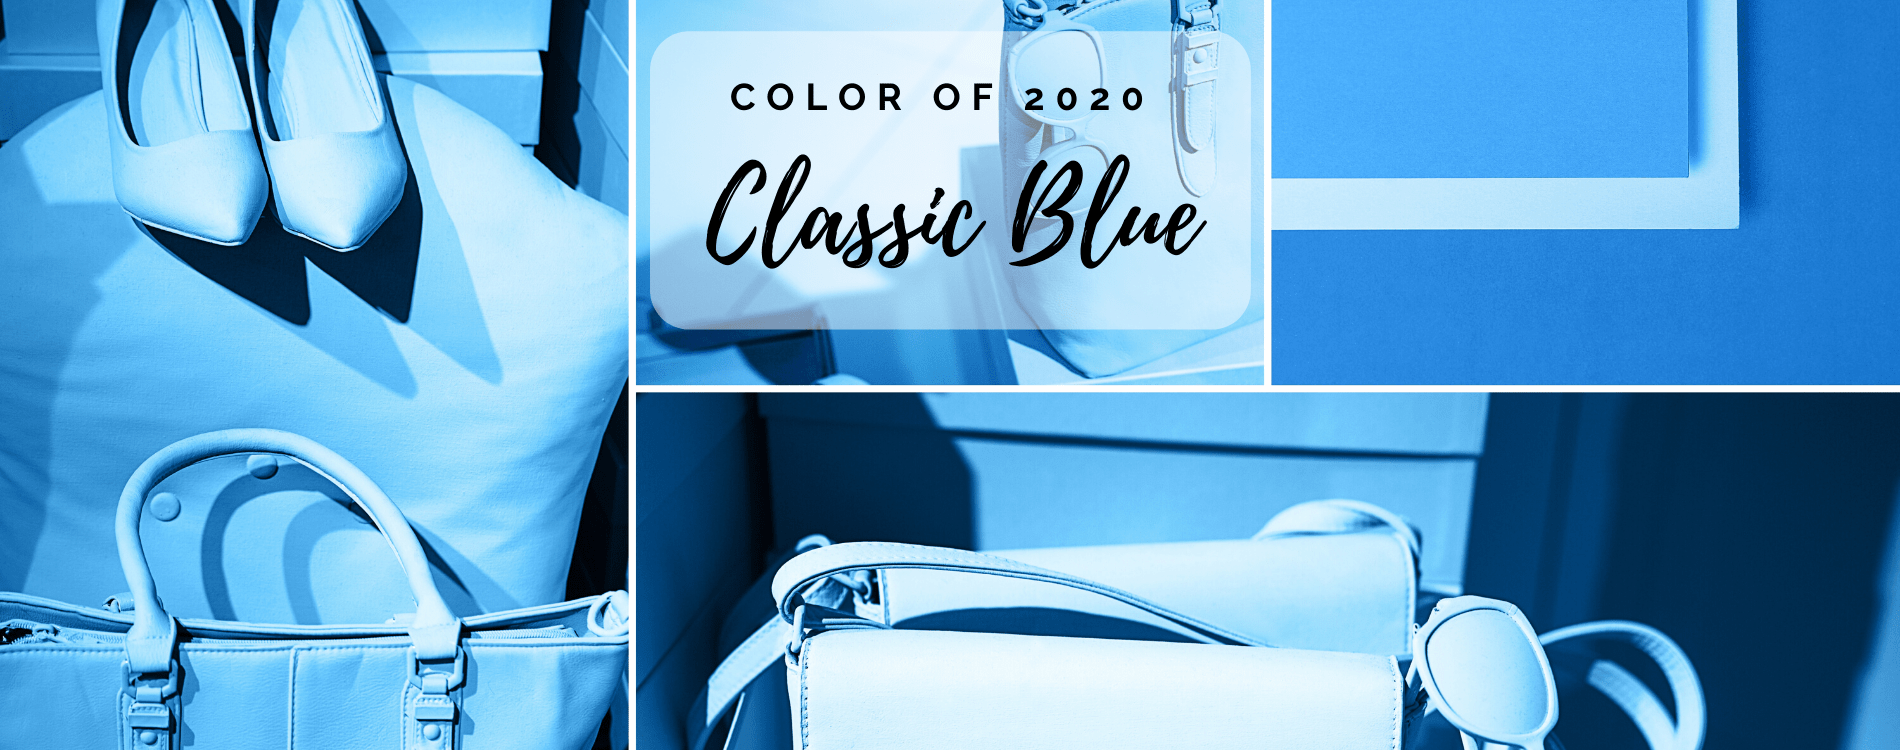 classic blue 2020